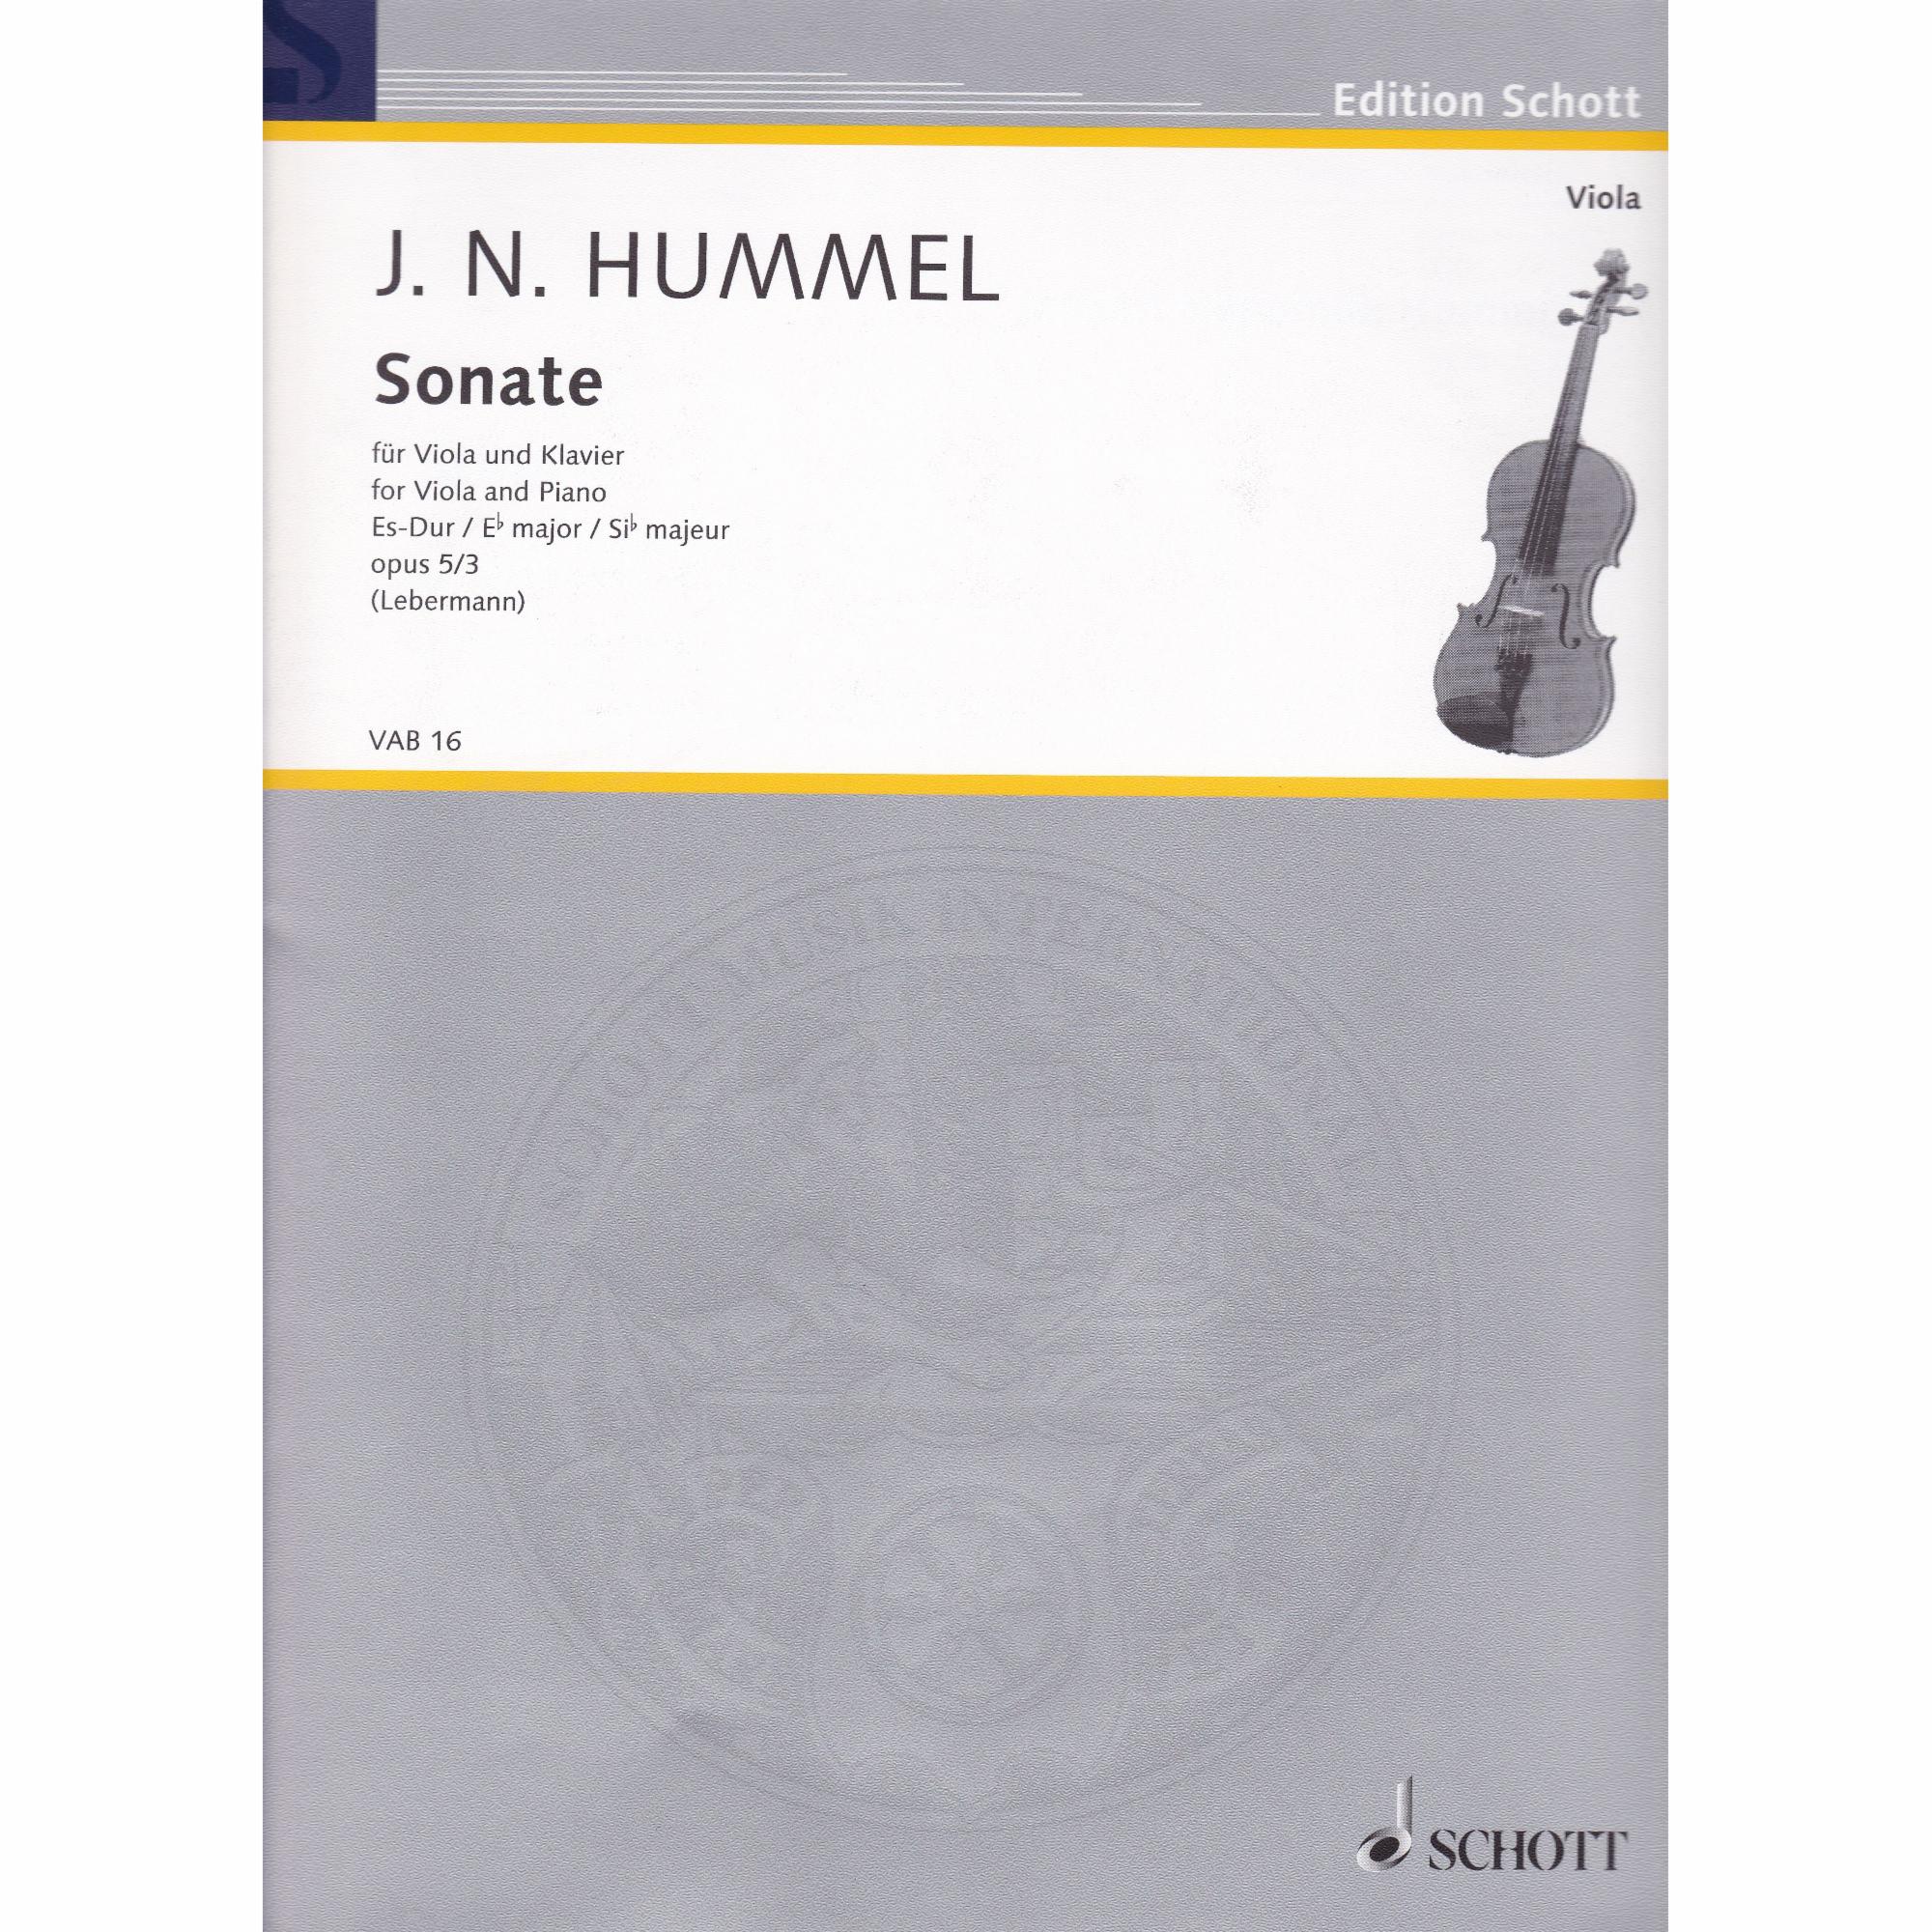 Viola Sonata in E-Flat Major, Op. 5. No. 3